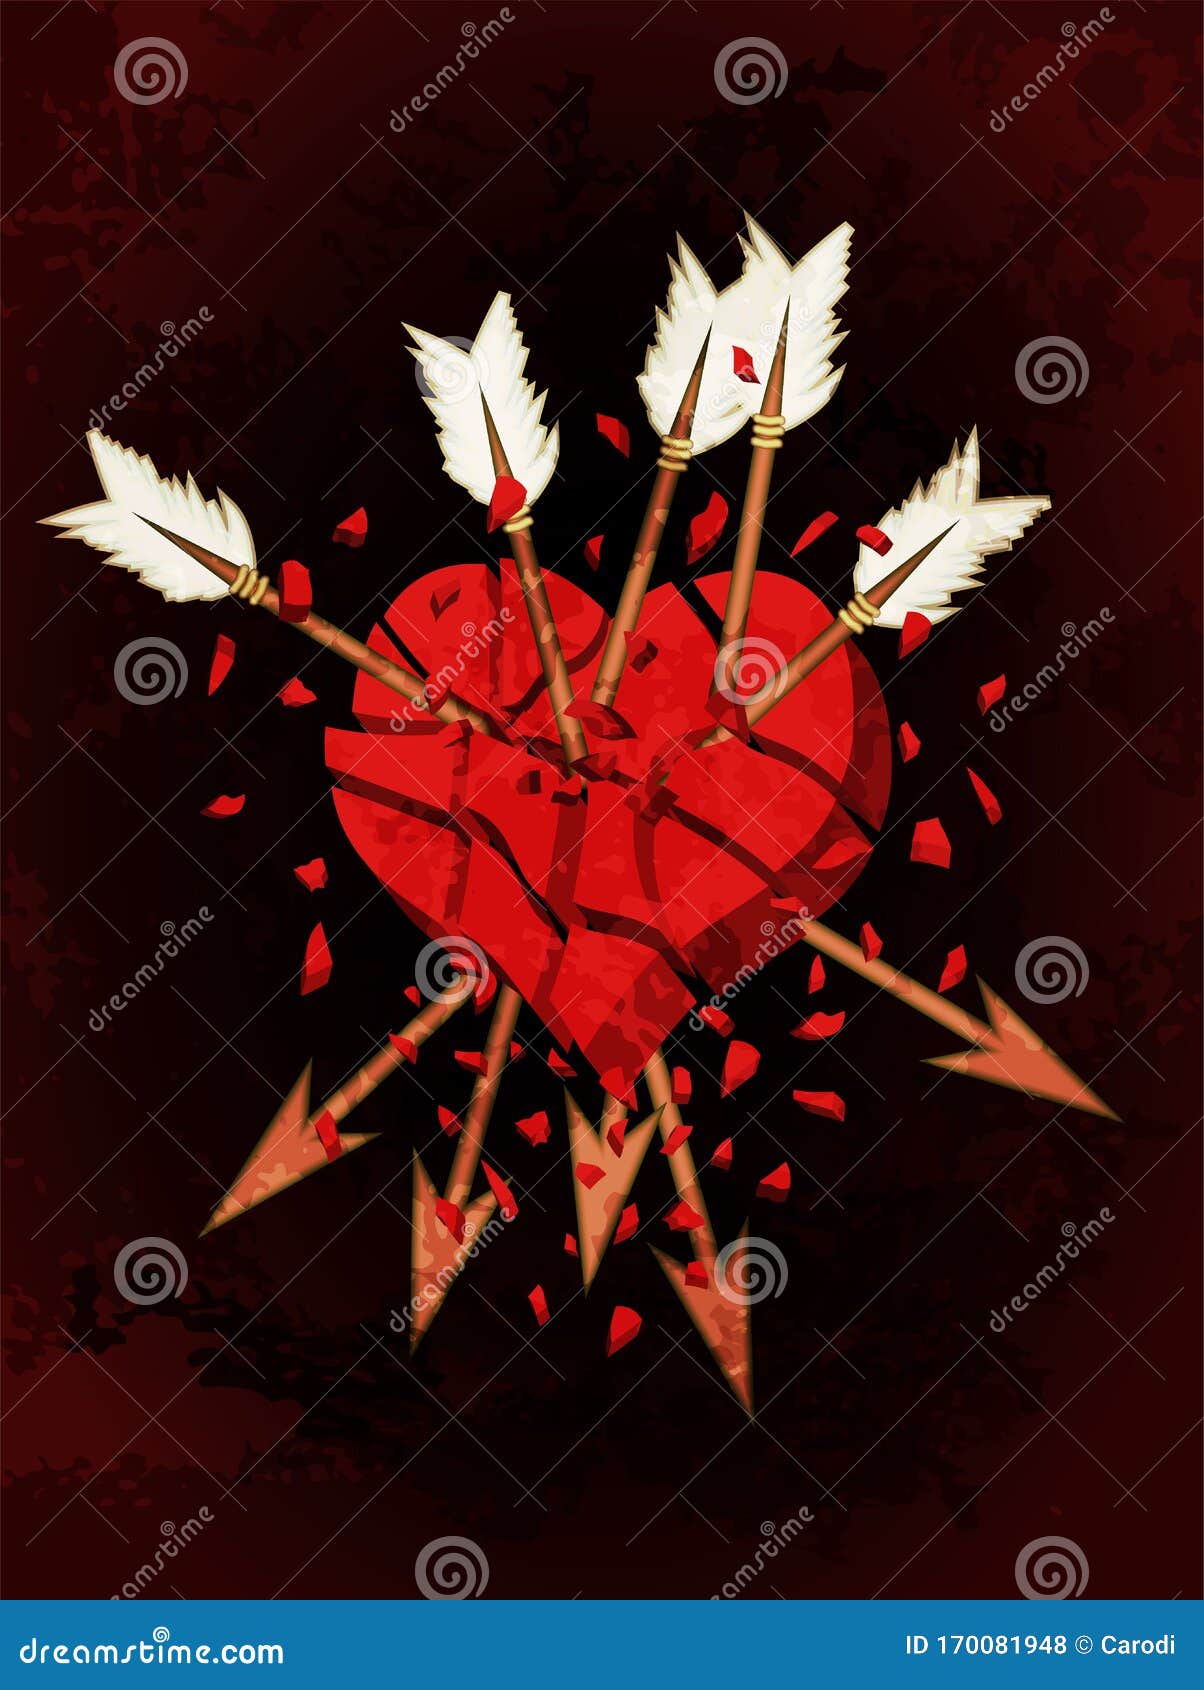 Broken Heart 3d Background, Vector Stock Vector - Illustration of ornament,  holiness: 170081948